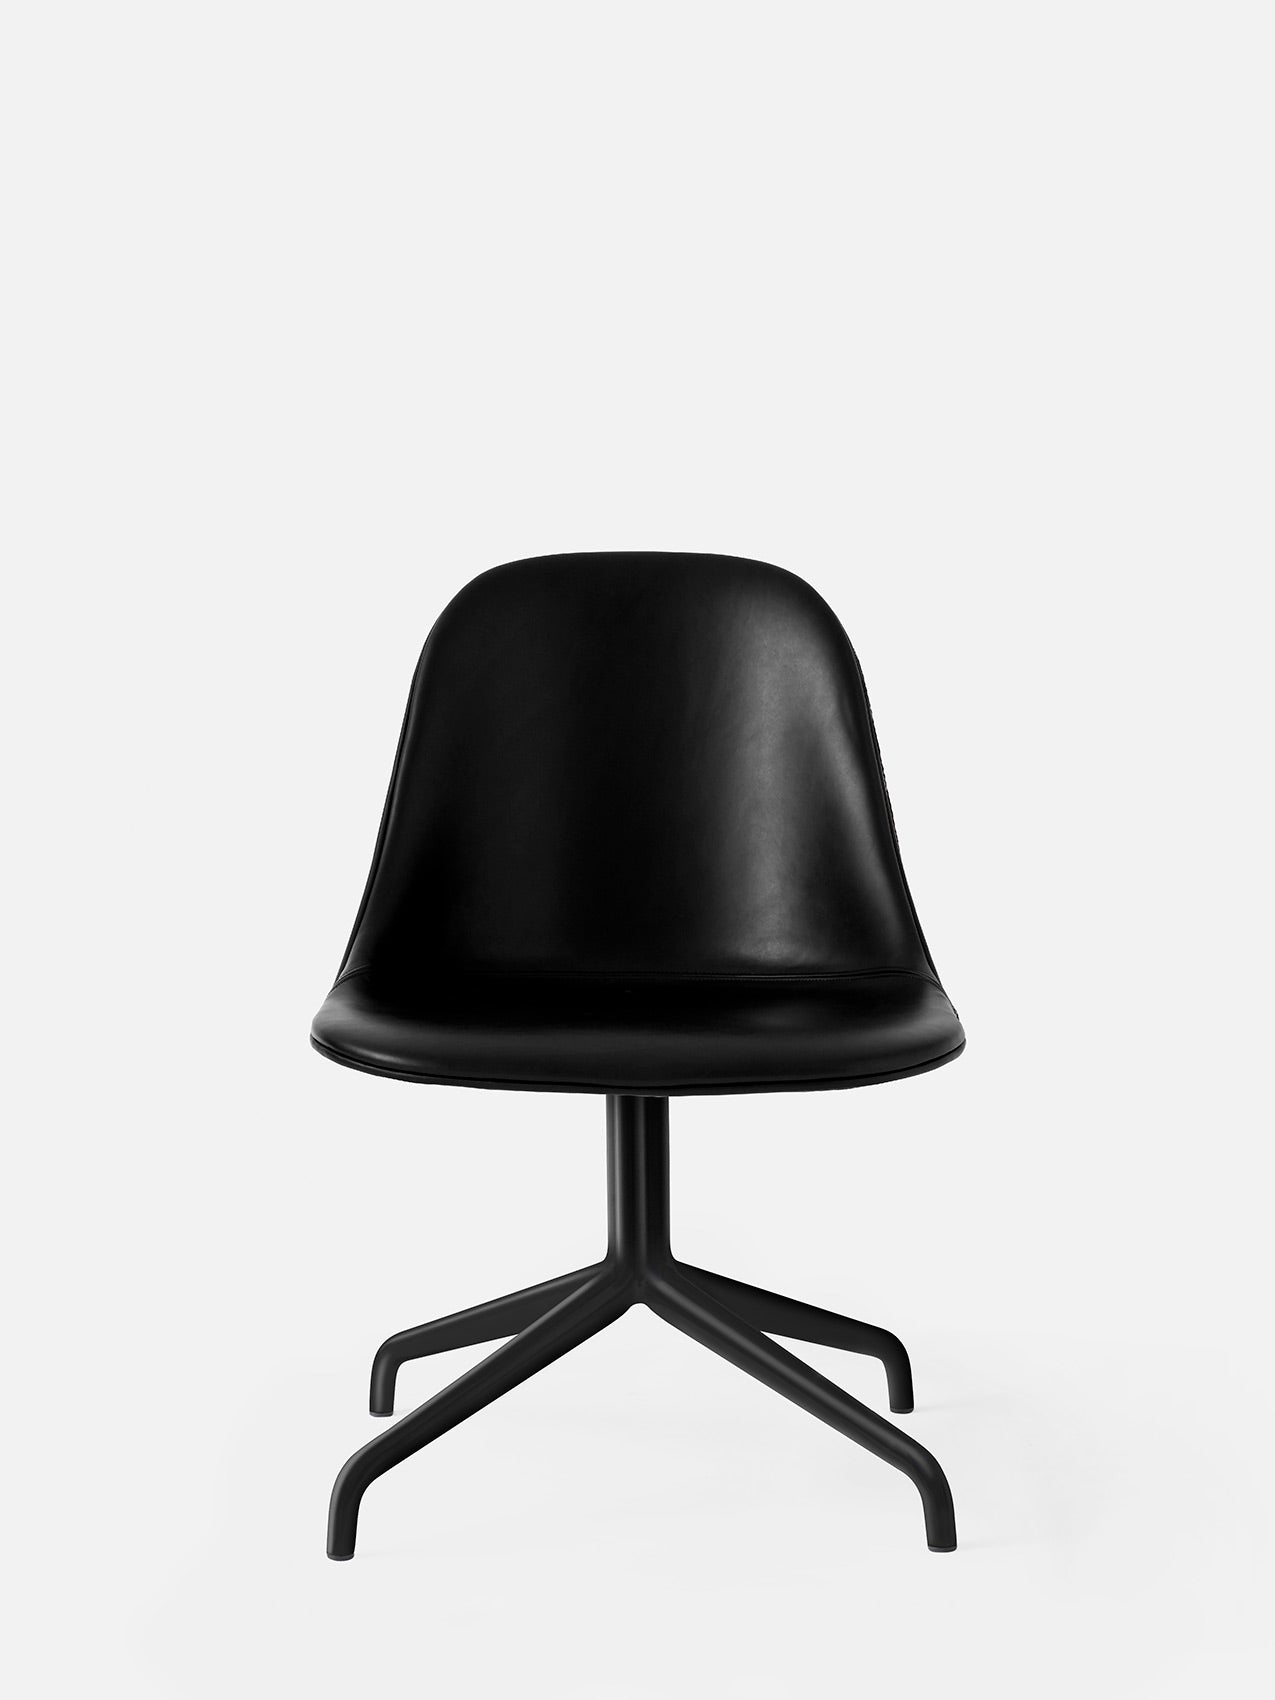 Harbour Side Chair, Upholstered-Chair-Norm Architects-Star Base (Seat 17.7in H)/Black Steel-0842 Black/Dakar-menu-minimalist-modern-danish-design-home-decor